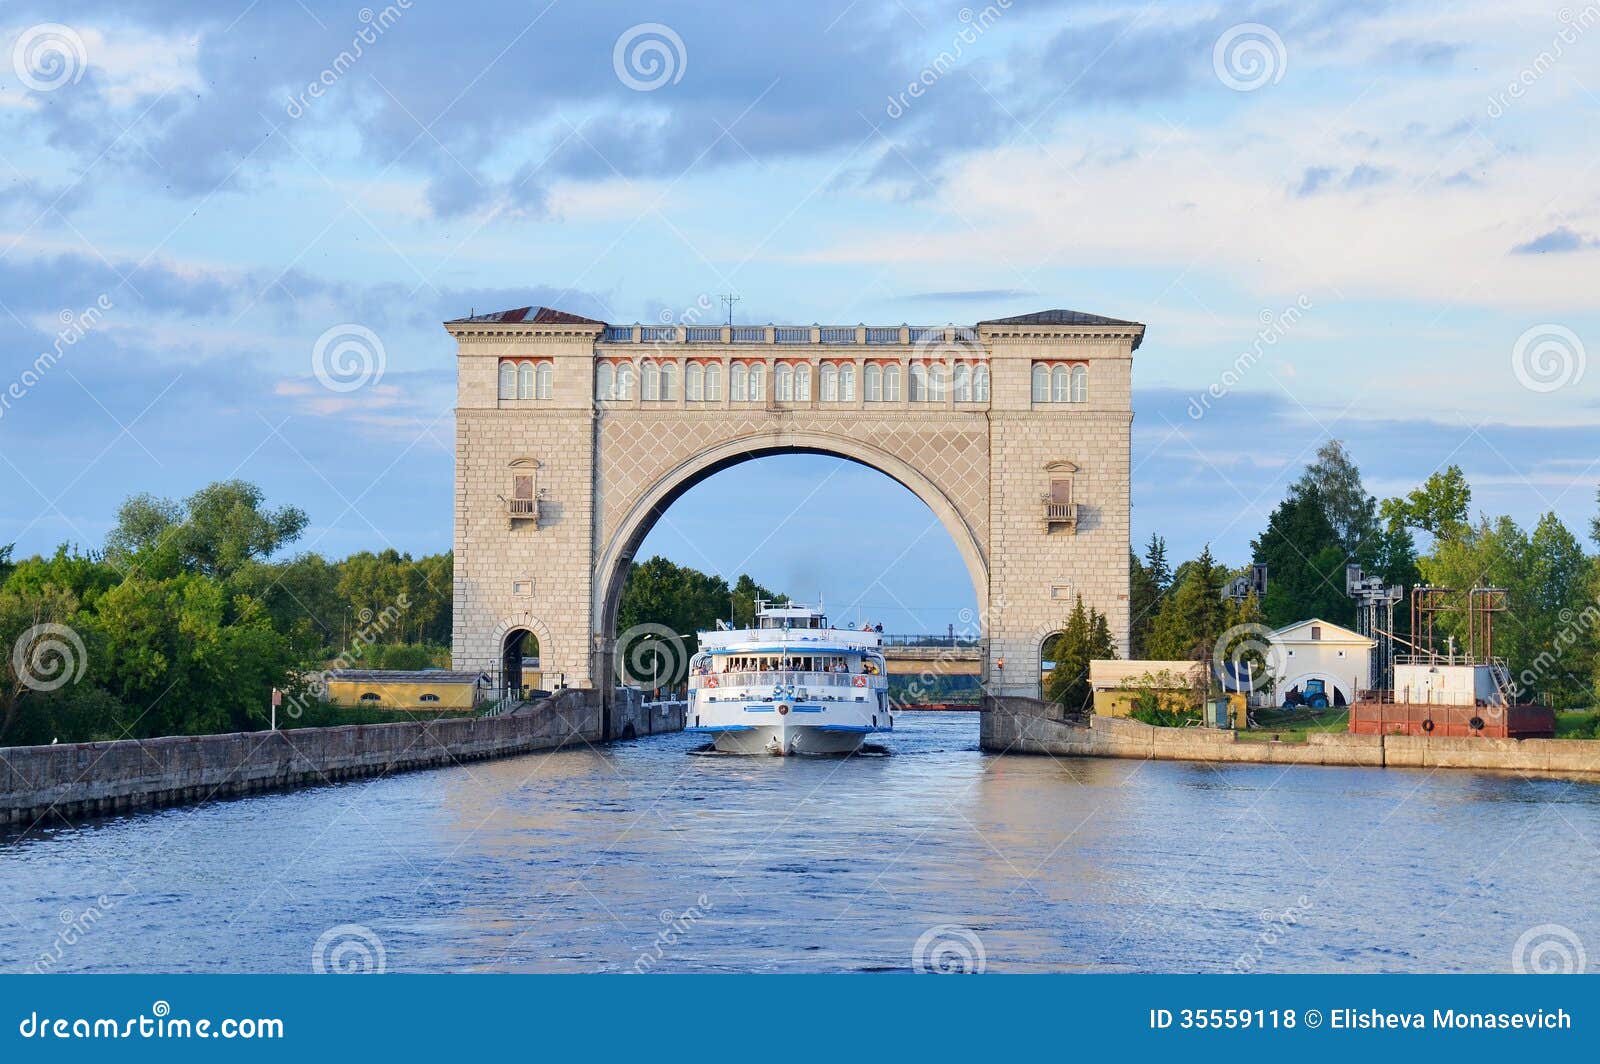 sluice gates on the river volga, russia with cruise boat